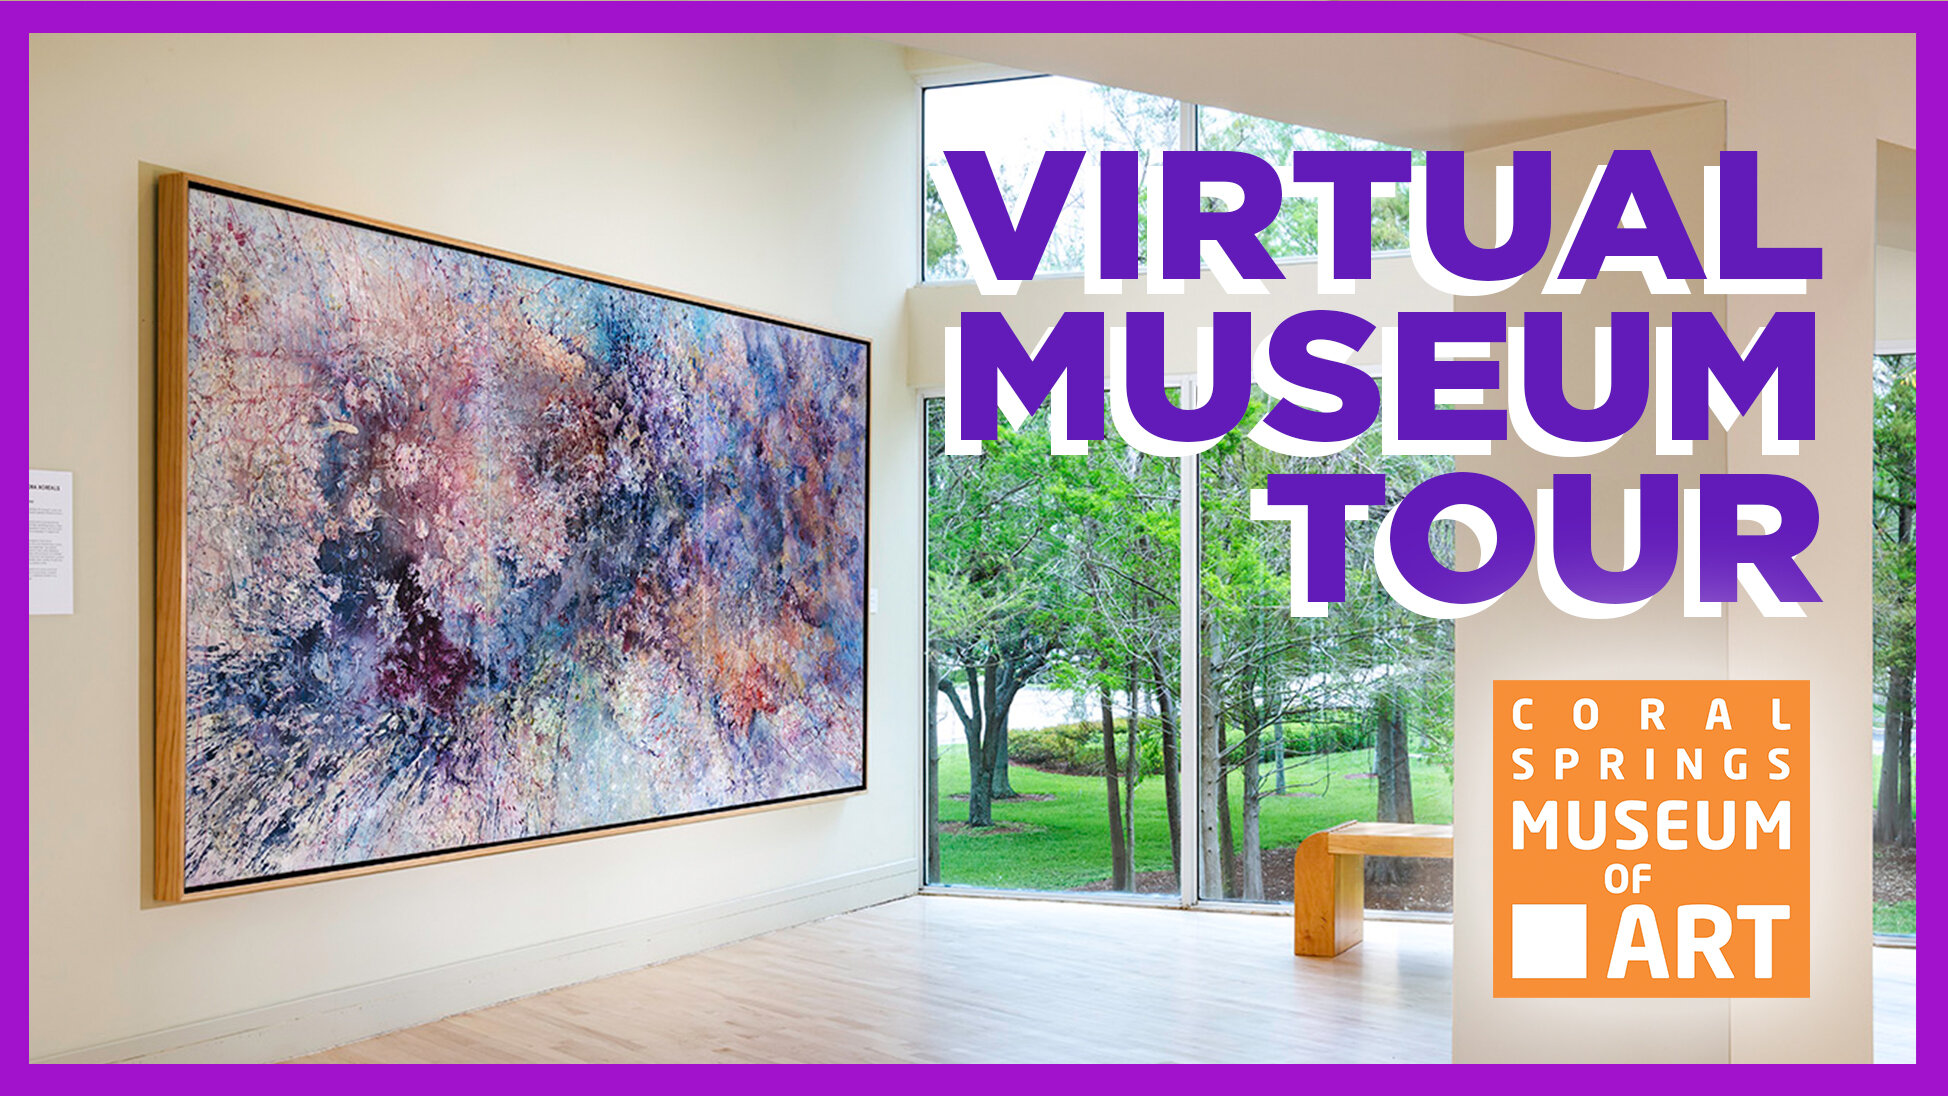 Coral Springs Museum of Art: Virtual Tour